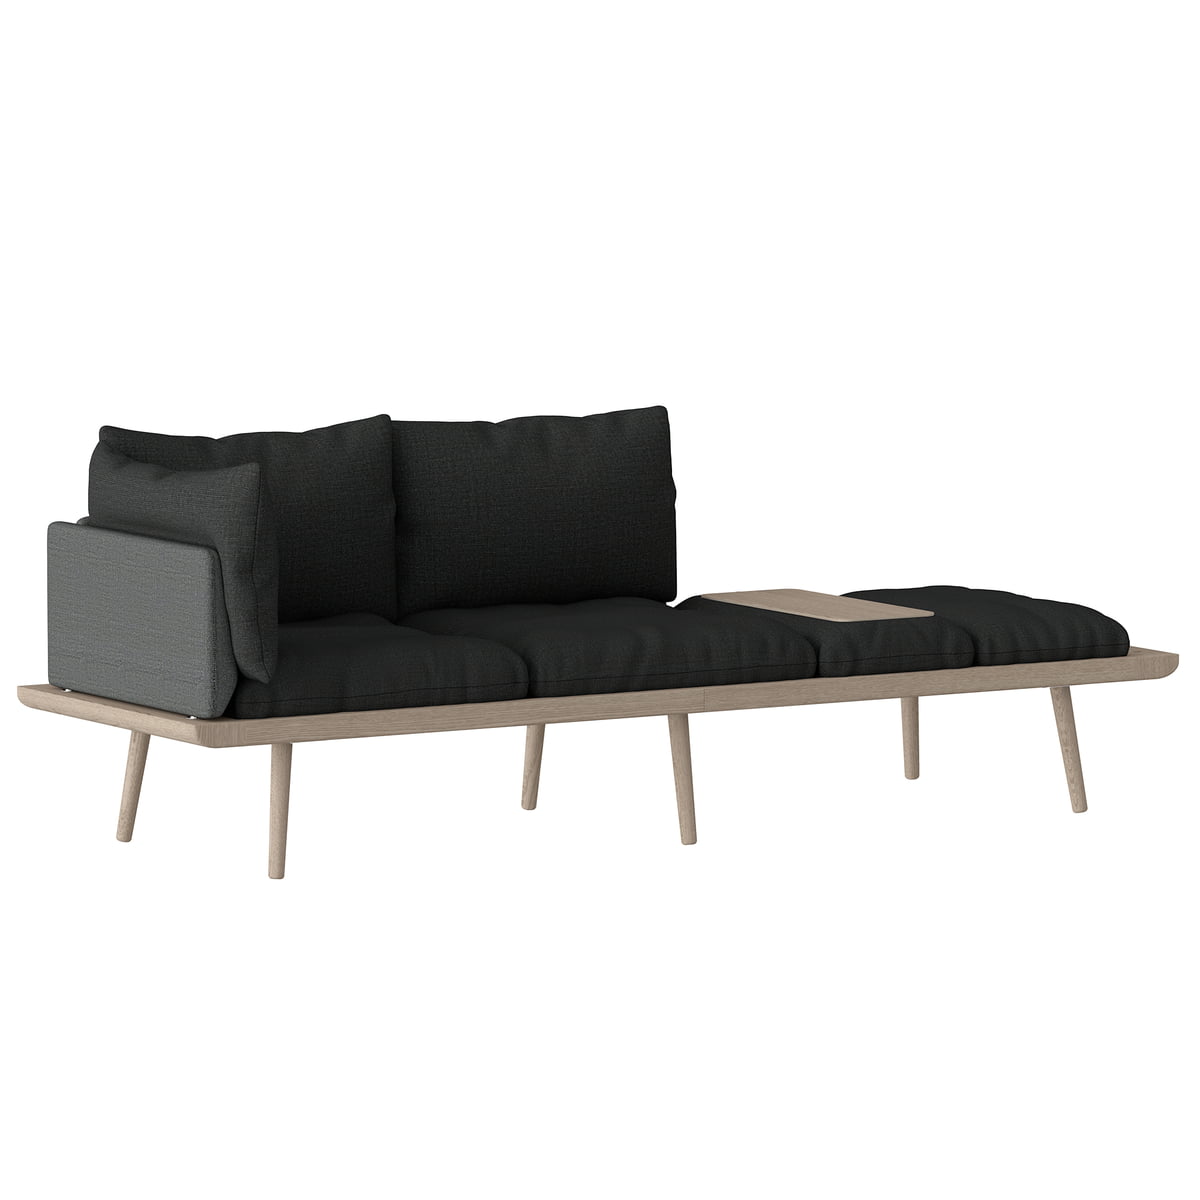 Umage - Lounge Around 3-Sitzer Sofa, Eiche, slate grey / dark grey